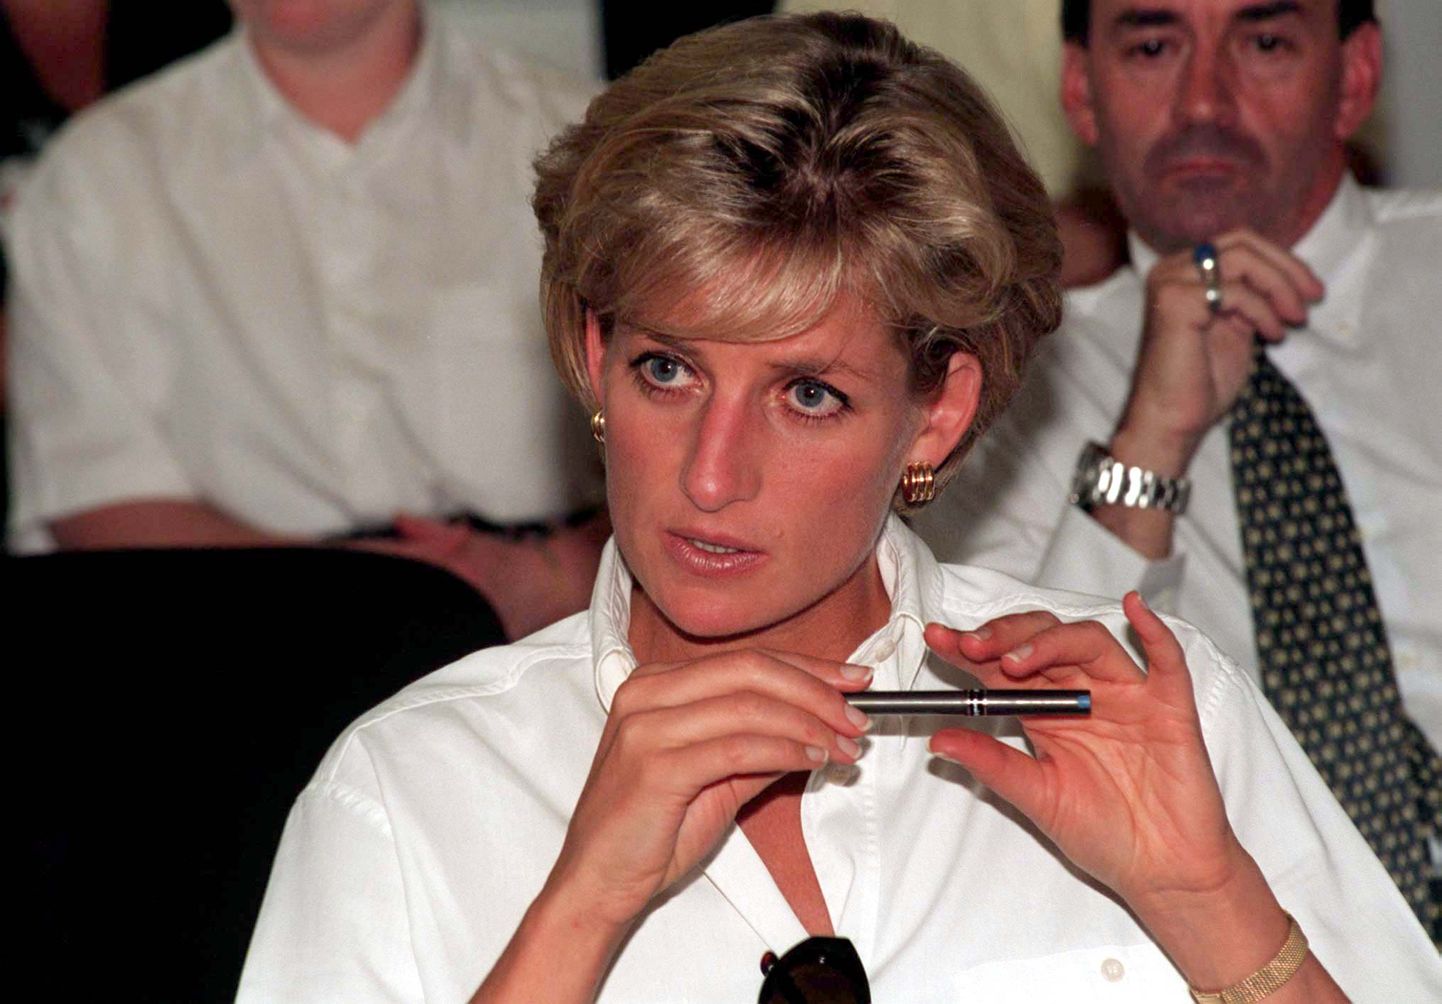 Diana 13. jaanuaril 1997. Diana hukkus 31. augustil 1997.